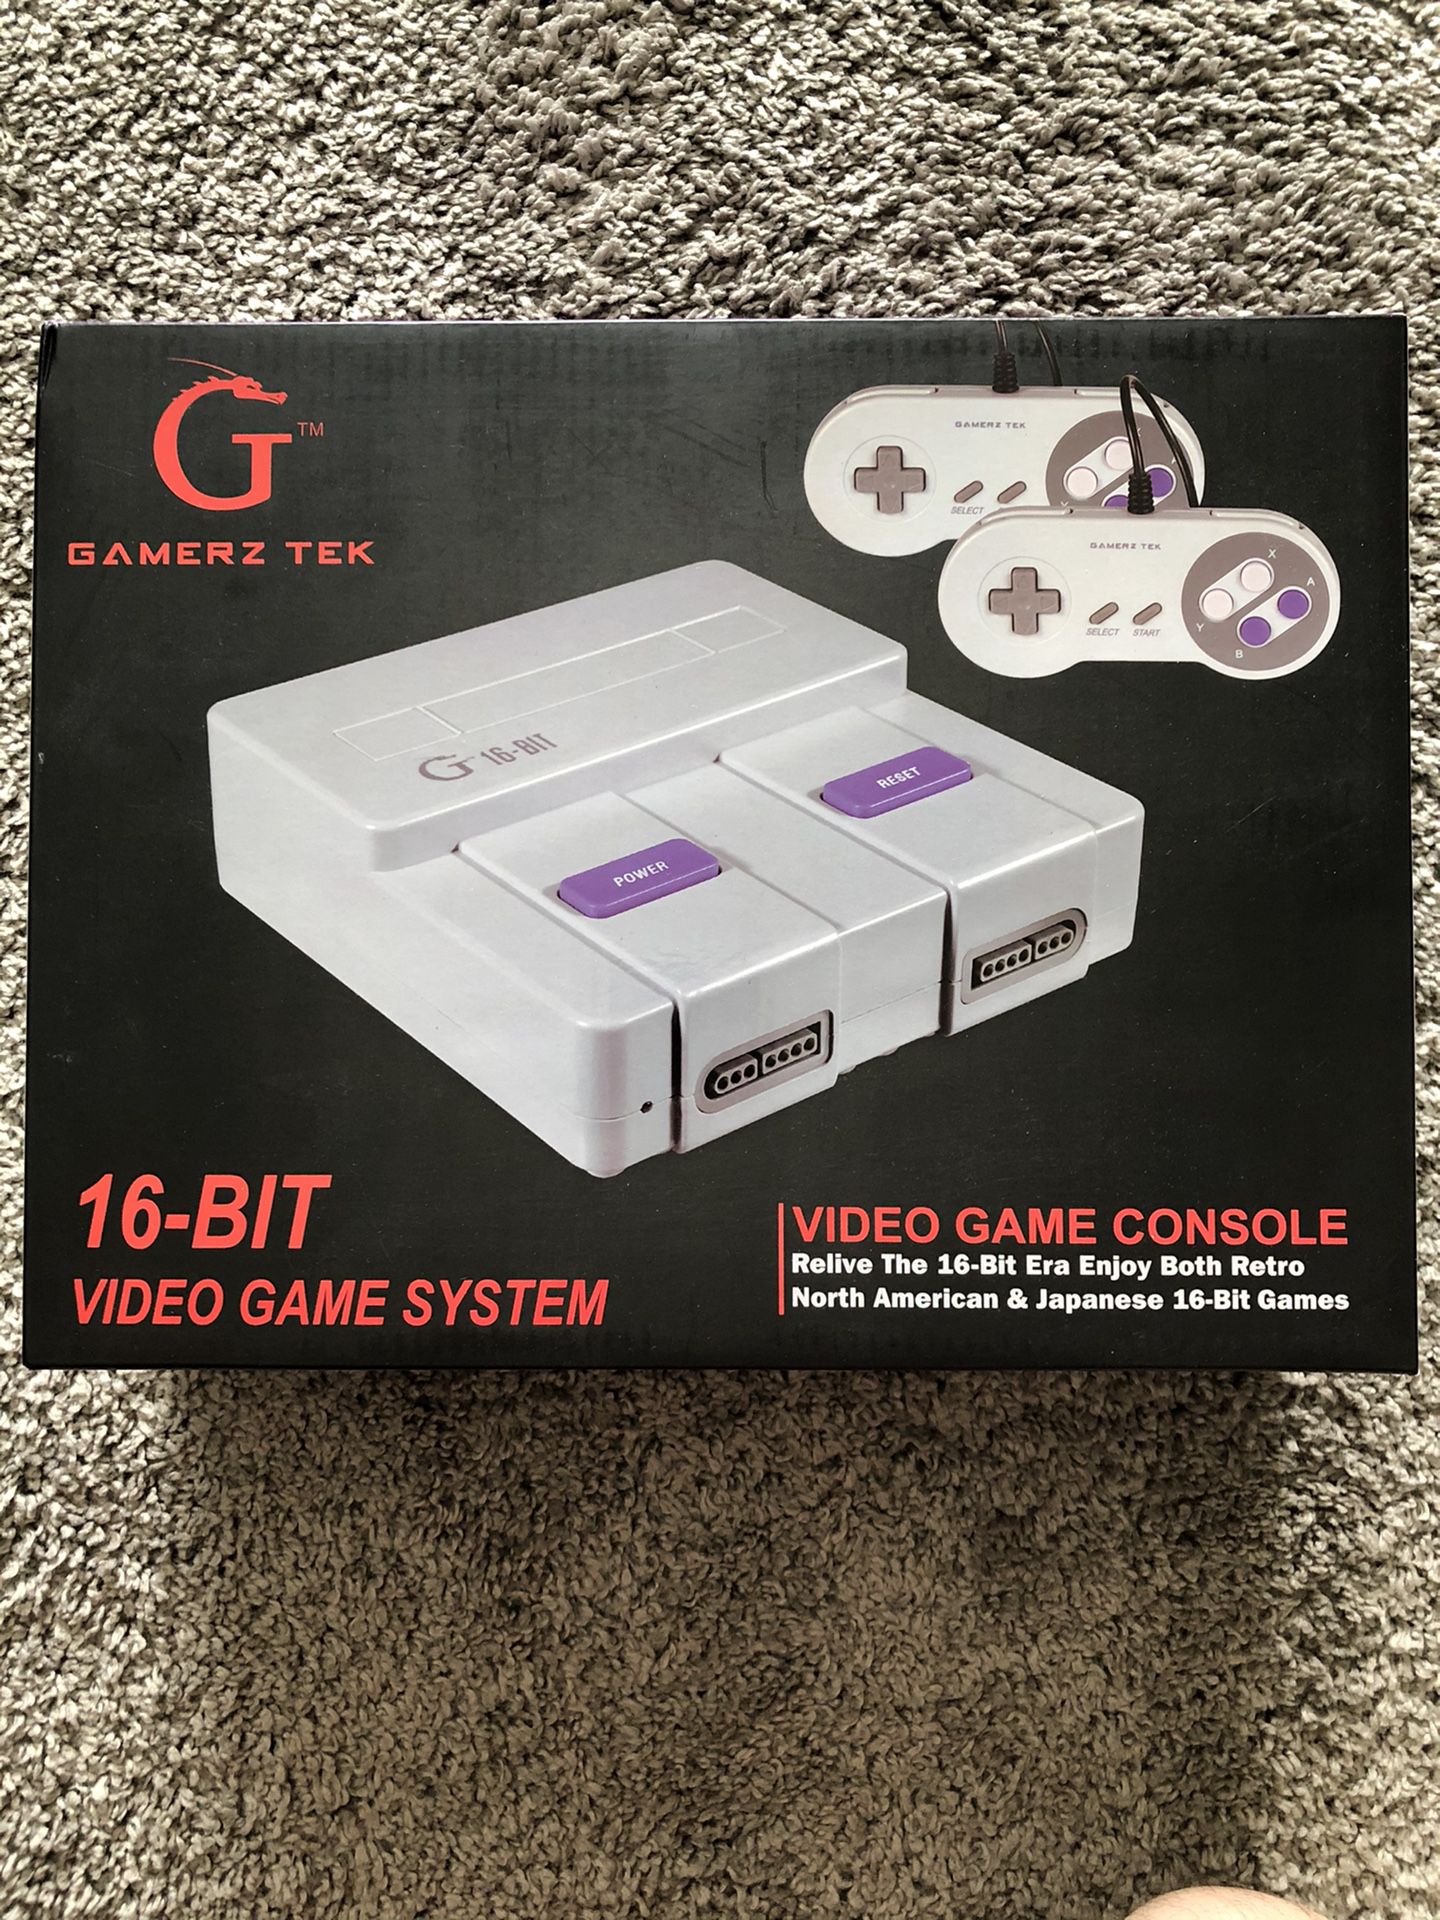 16-bit video game system